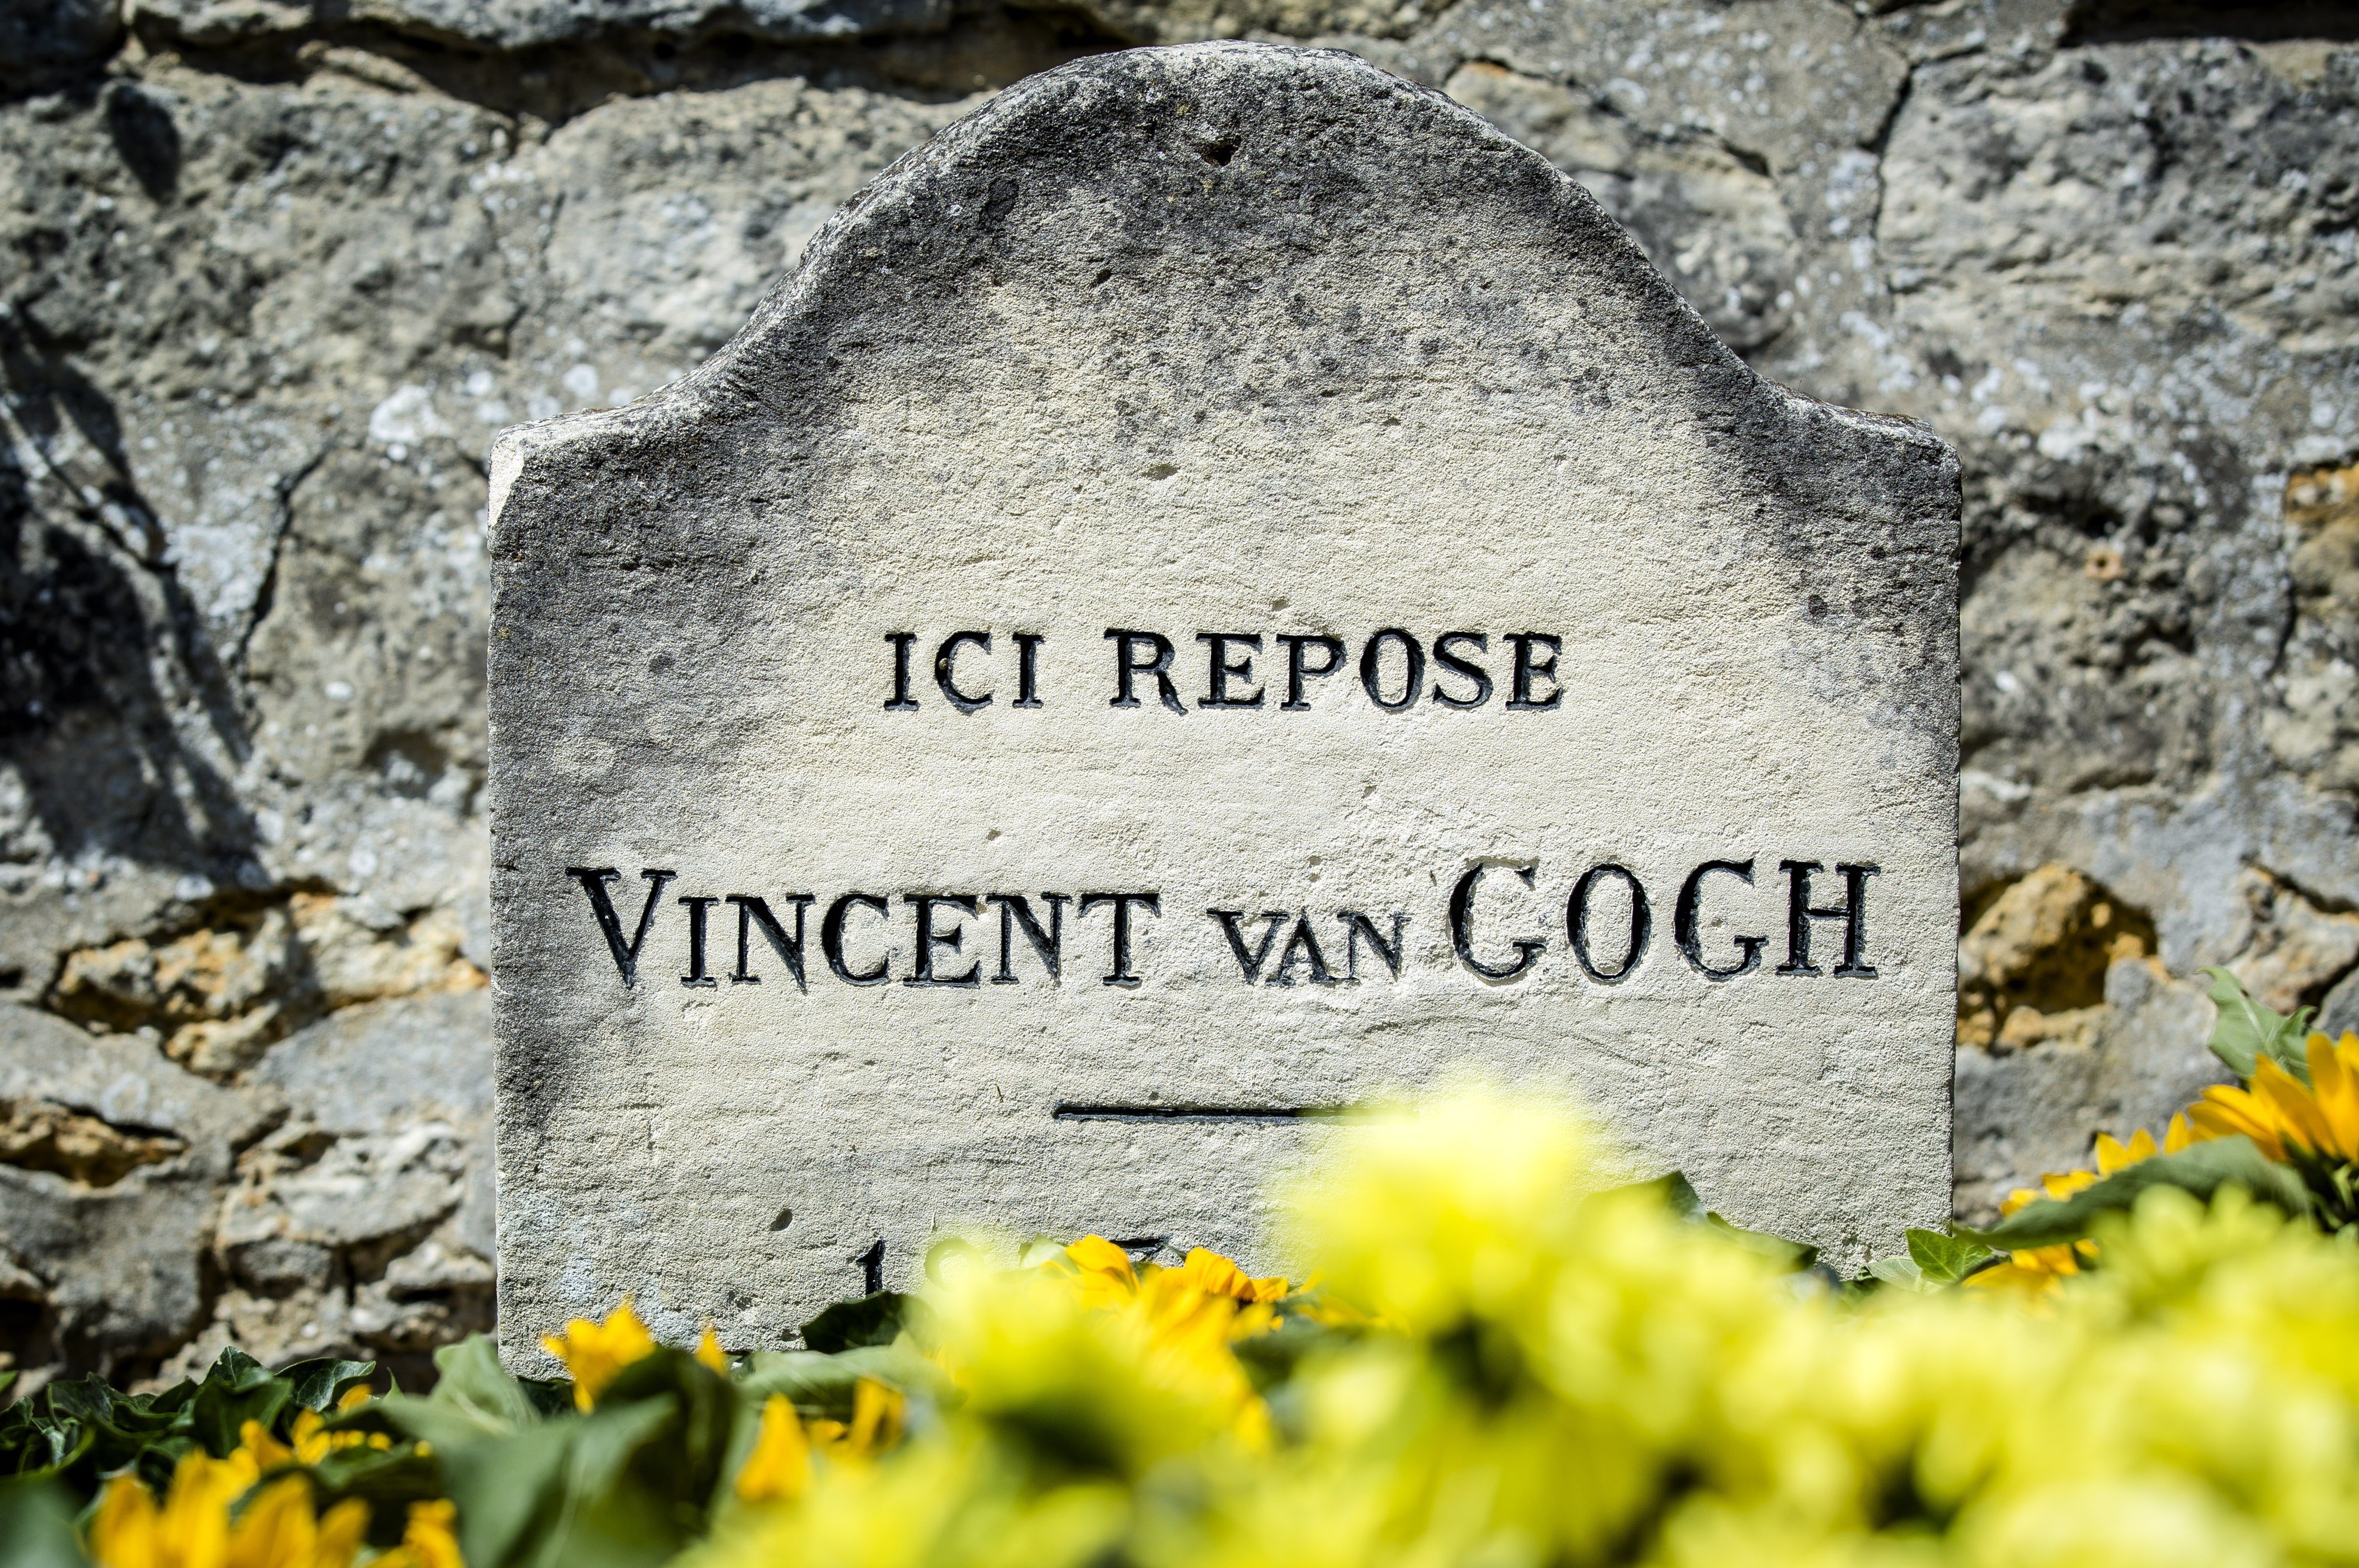 Van Gogh S Grave Is In Desperate Need Of Restoration Artnet News